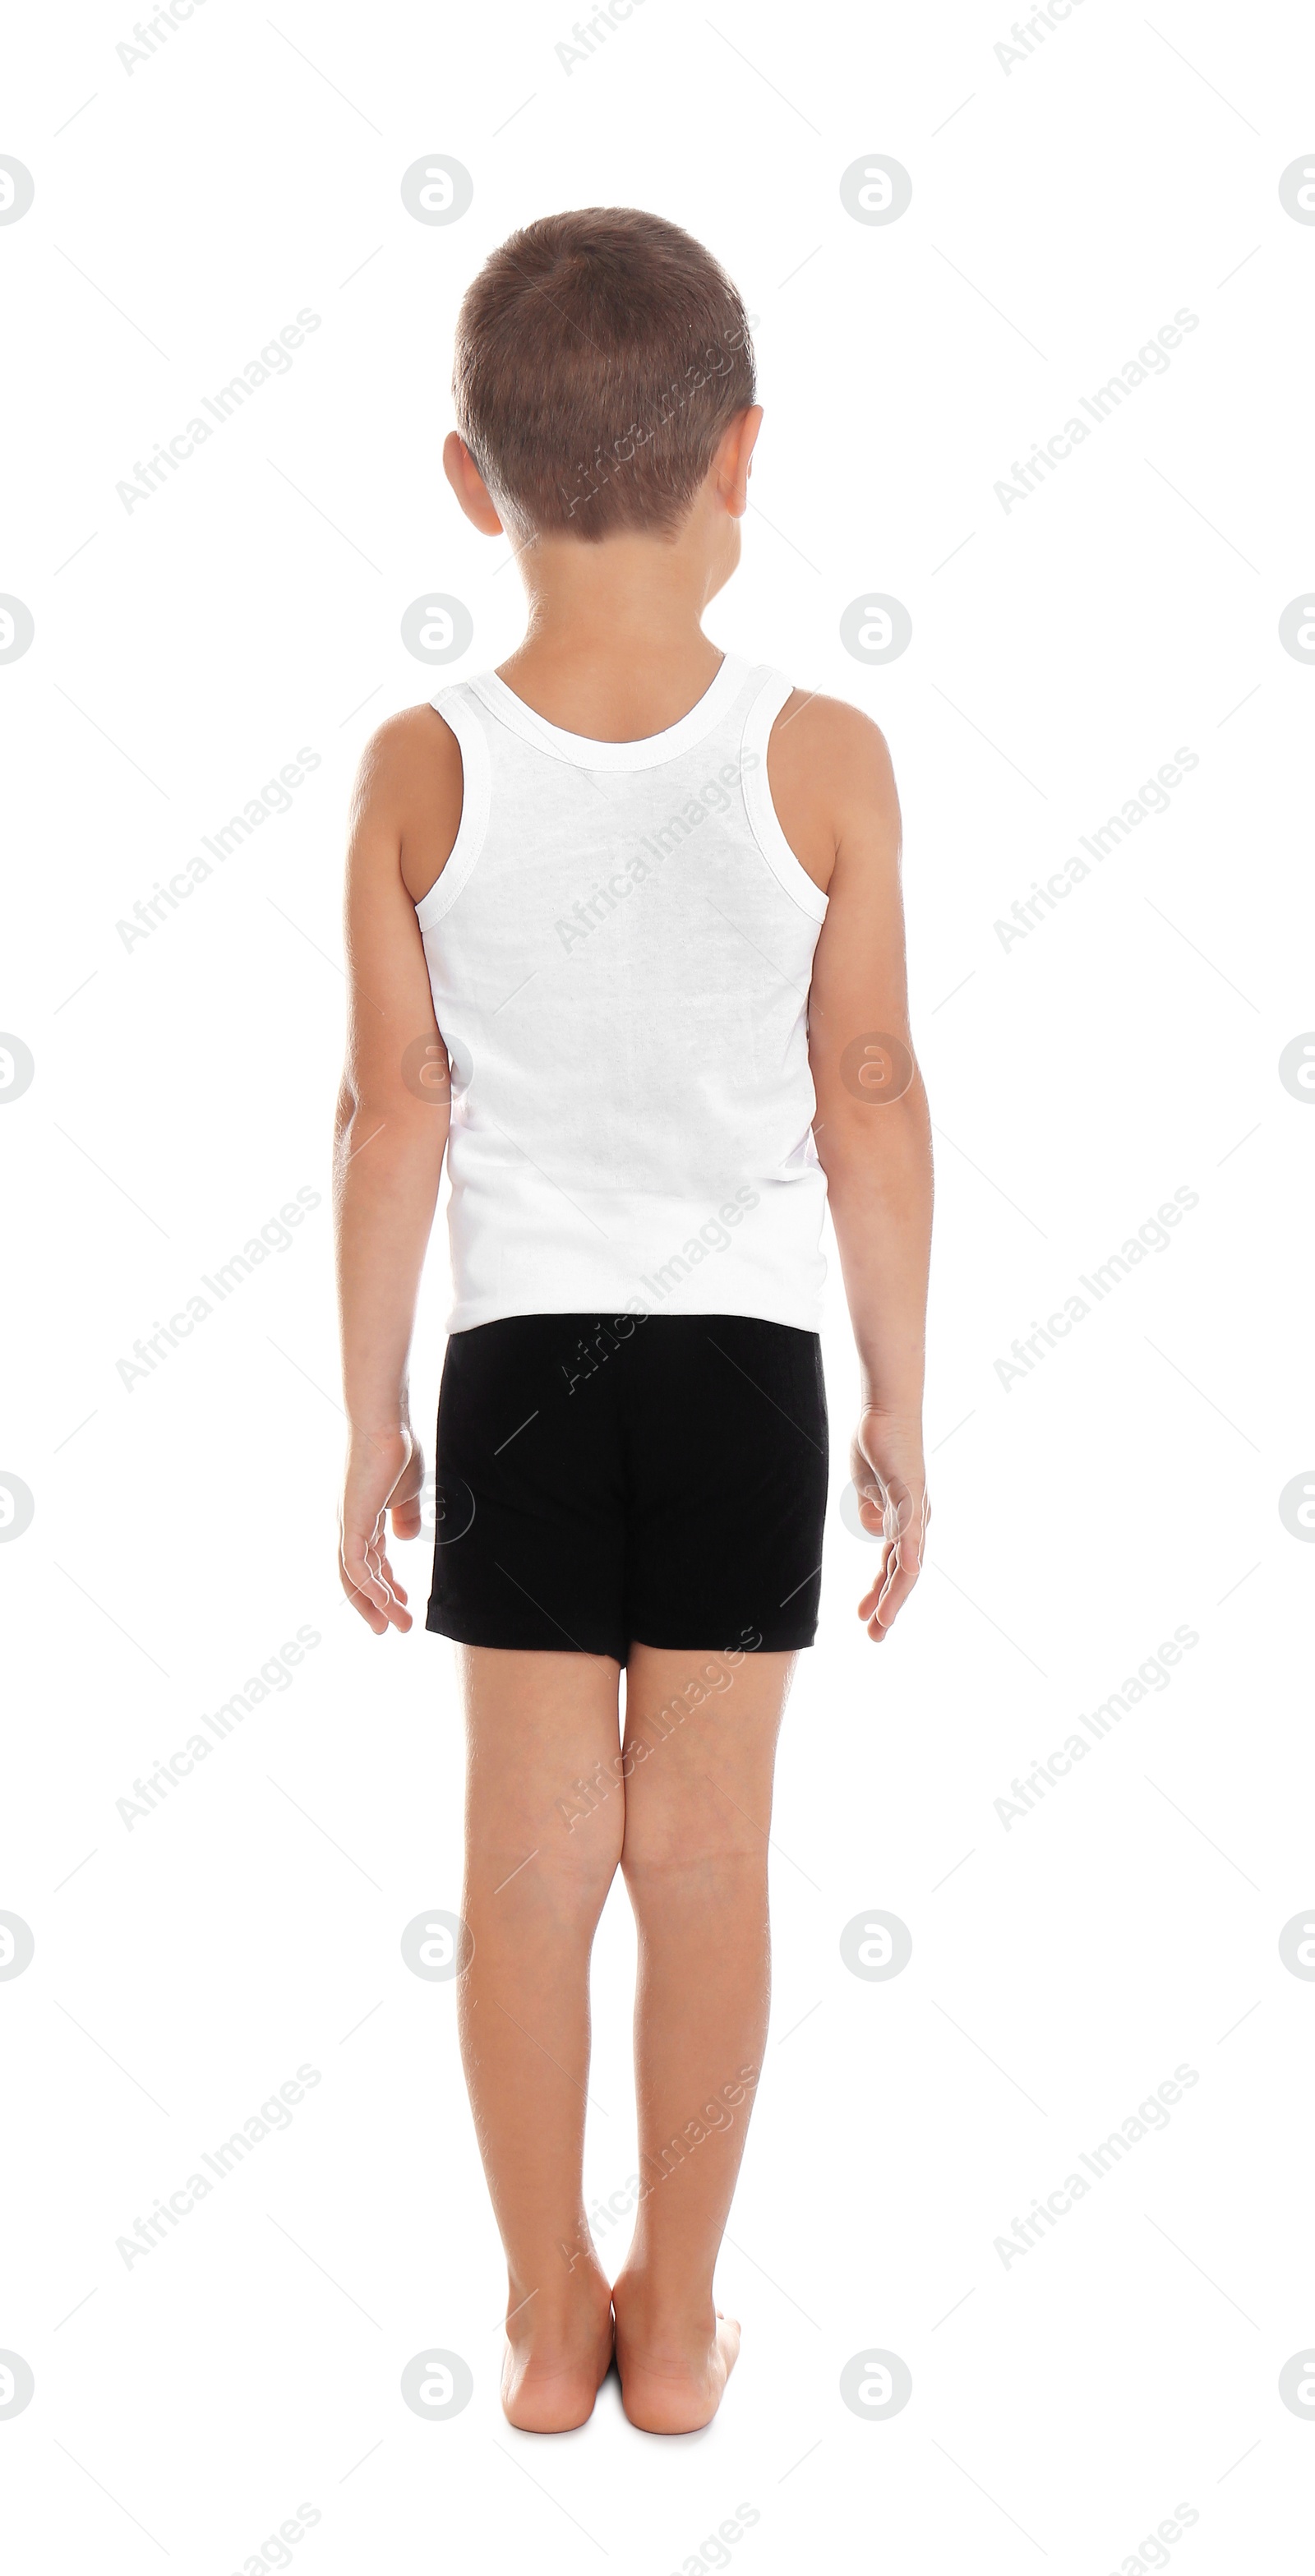 Photo of Little boy in underwear on white background, back view